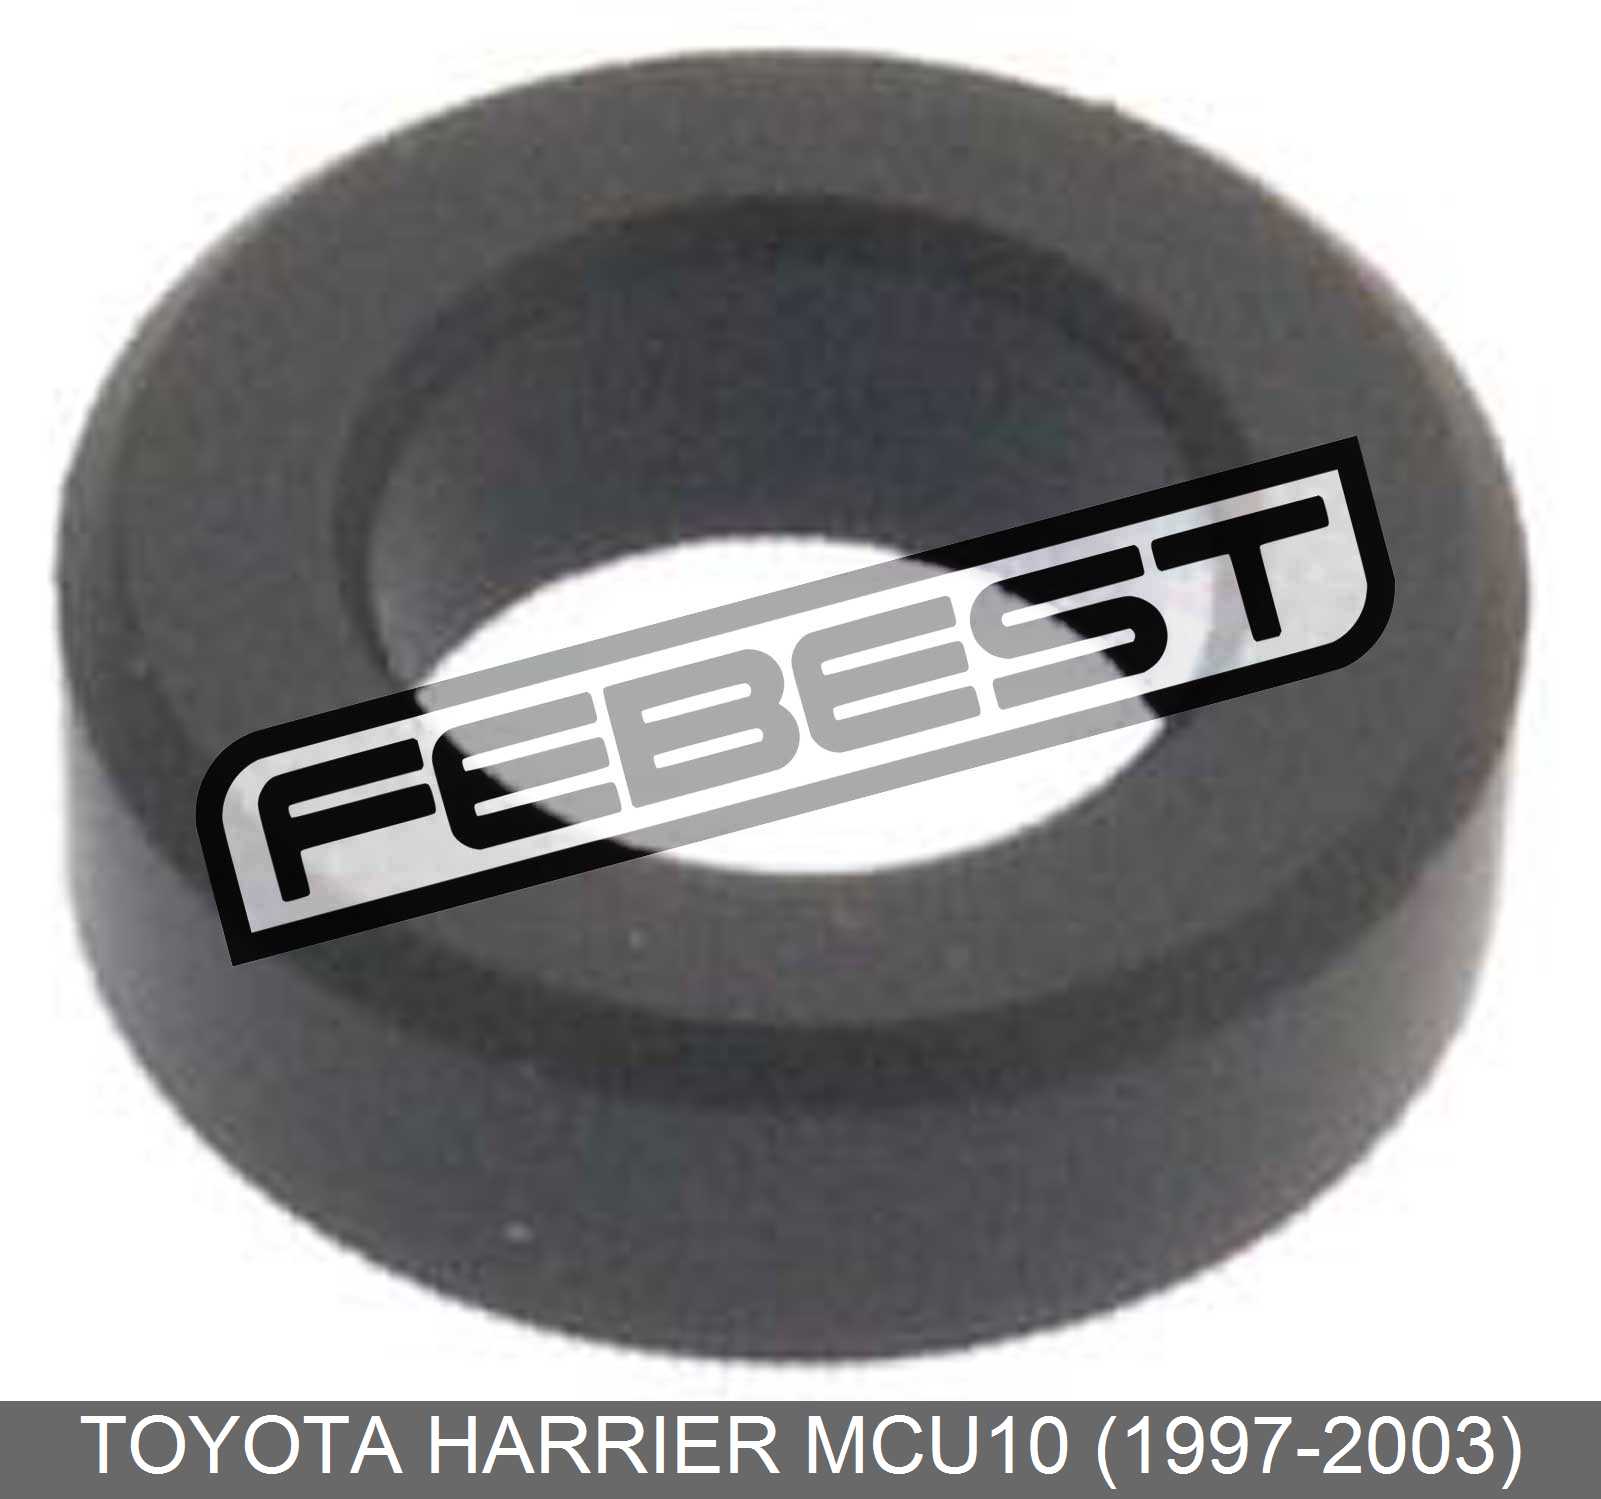 Drive Shaft Bearing For Toyota Harrier Mcu10 1997-2003